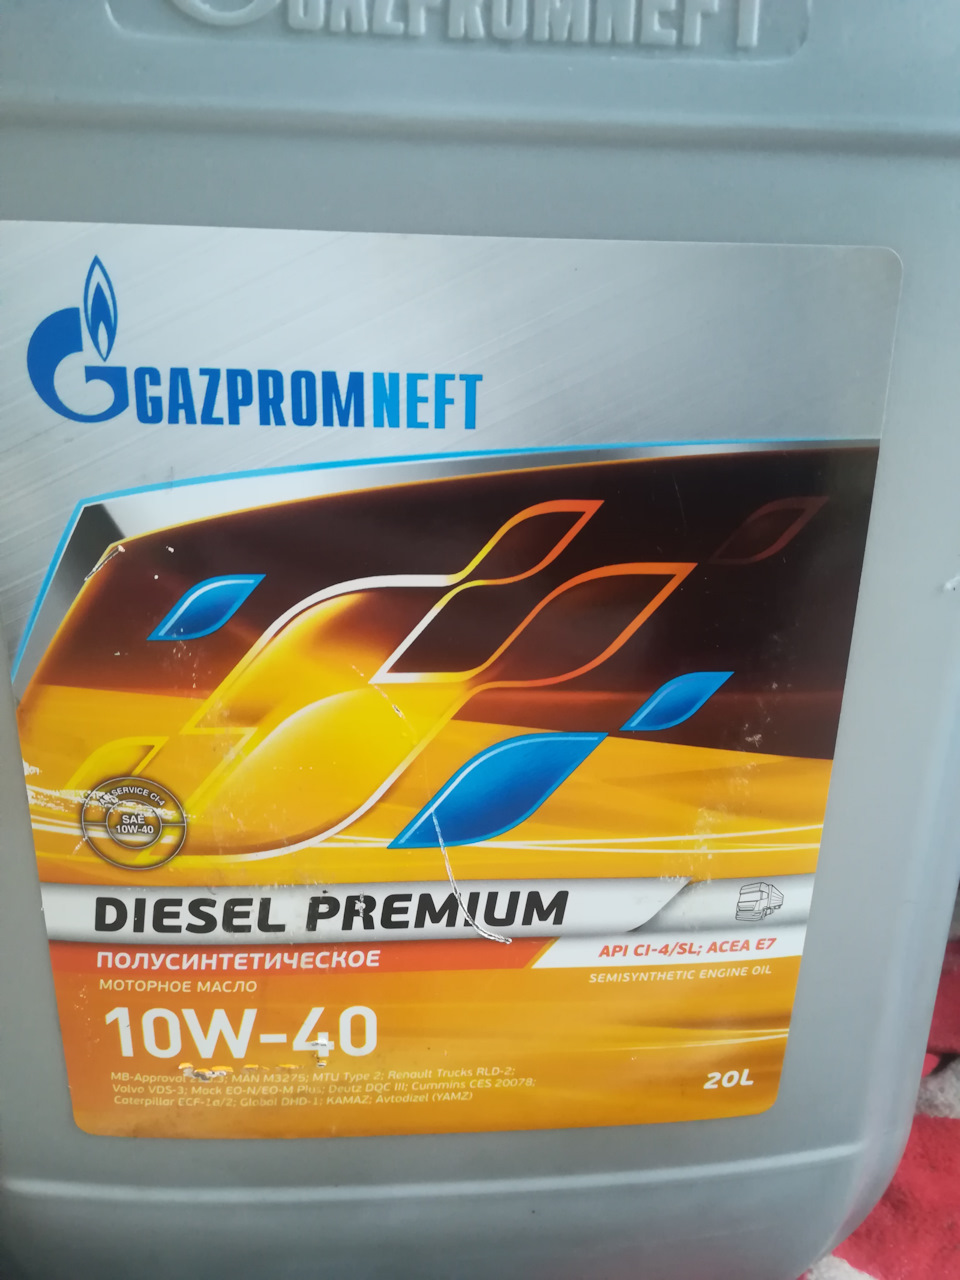 Масло дизель премиум 10w 40. Газпромнефть дизель премиум 10w 40. Diesel Premium 10w-40 CL-4. Gazpromneft Diesel Premium 10w-40 одобрение КАМАЗ.